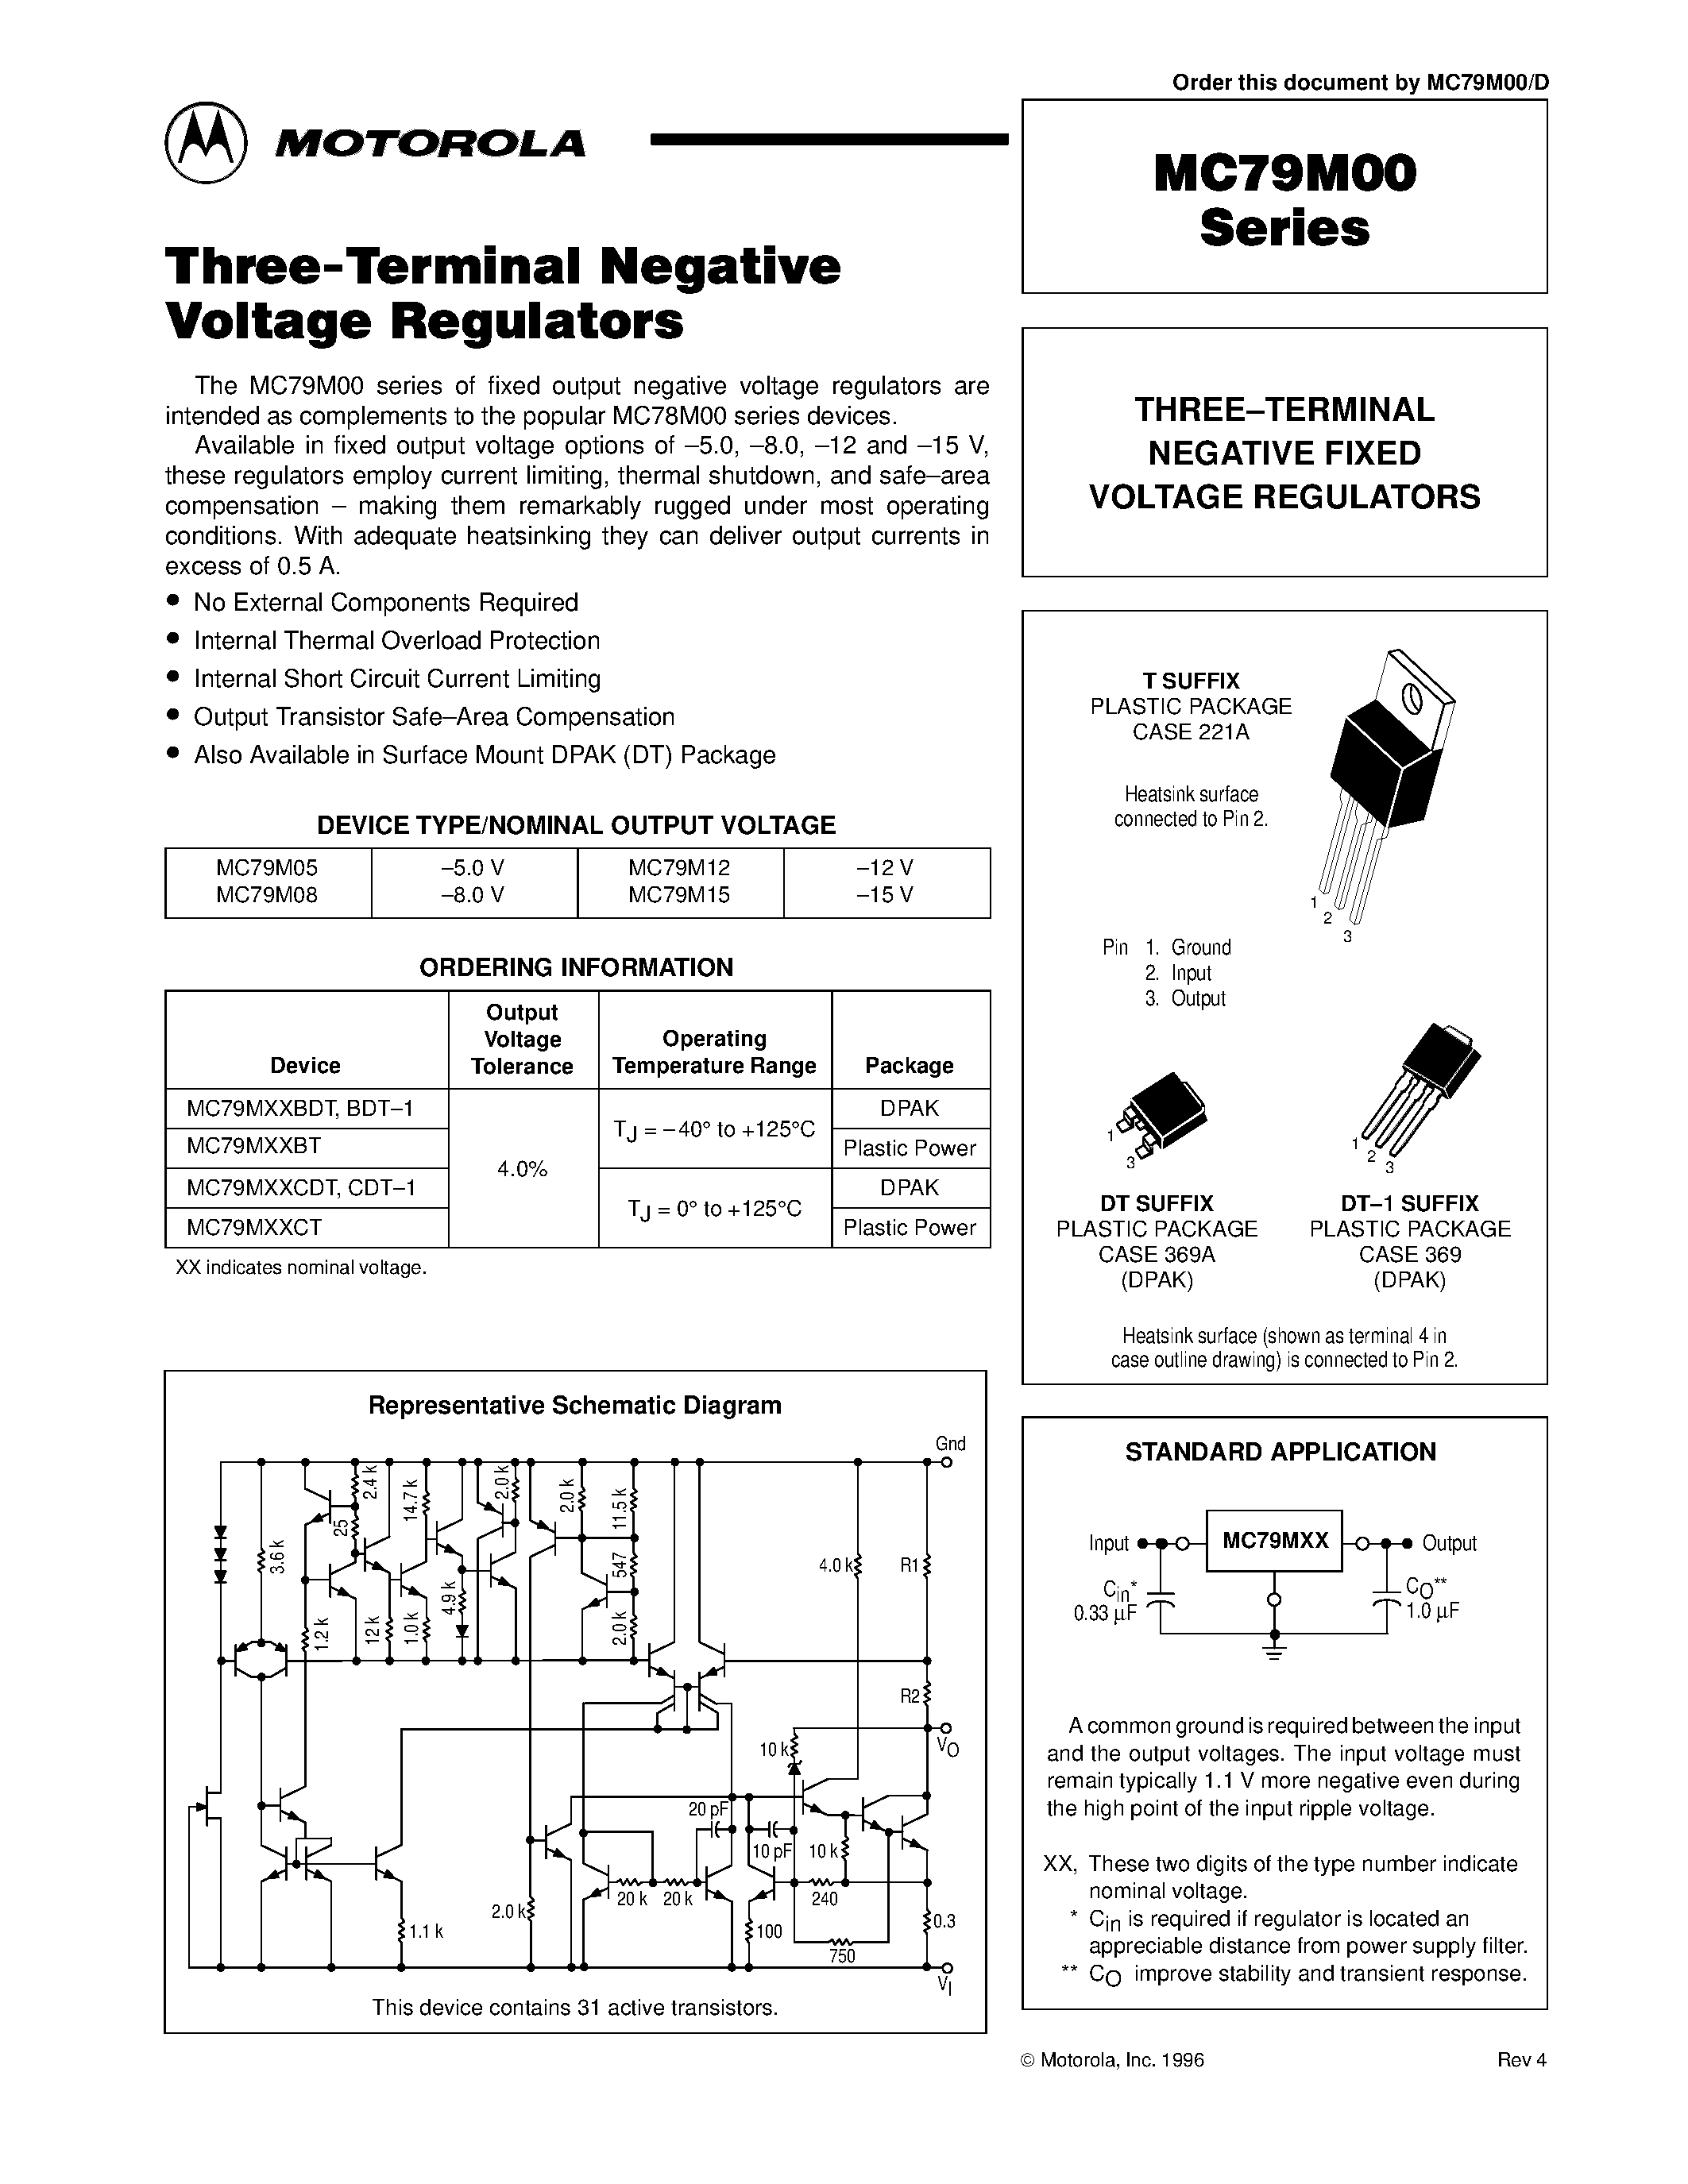 Datasheet MC79M12XBT - THREE-TERMINAL NEGATIVE FIXED VOLTAGE REGULATORS page 1